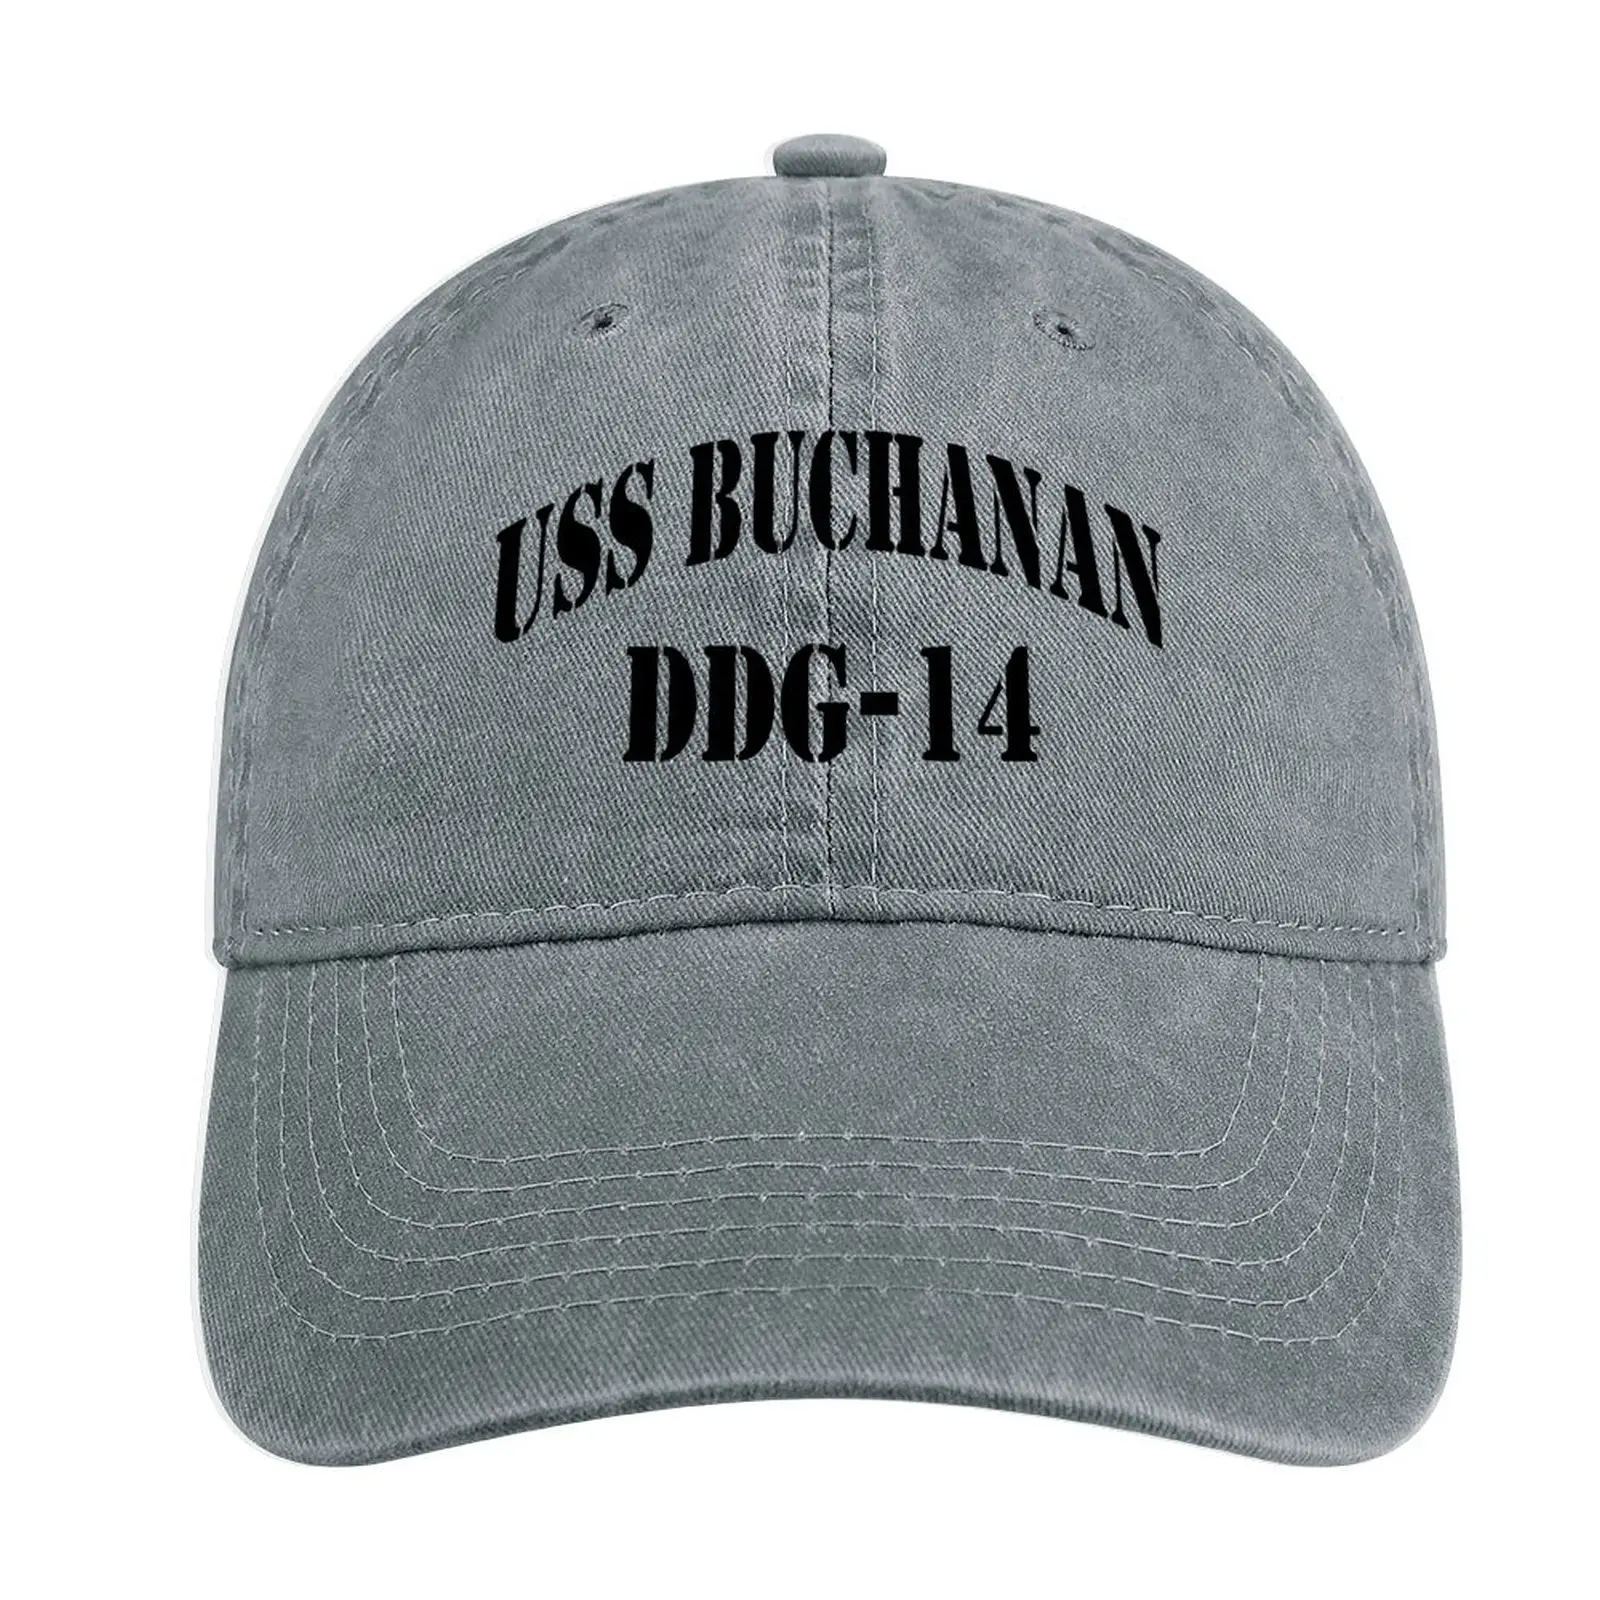 

USS BUCHANAN (DDG-14) SHIP'S STORE Cowboy Hat Golf Wear Cosplay fashion Rave Cap Female Men'S